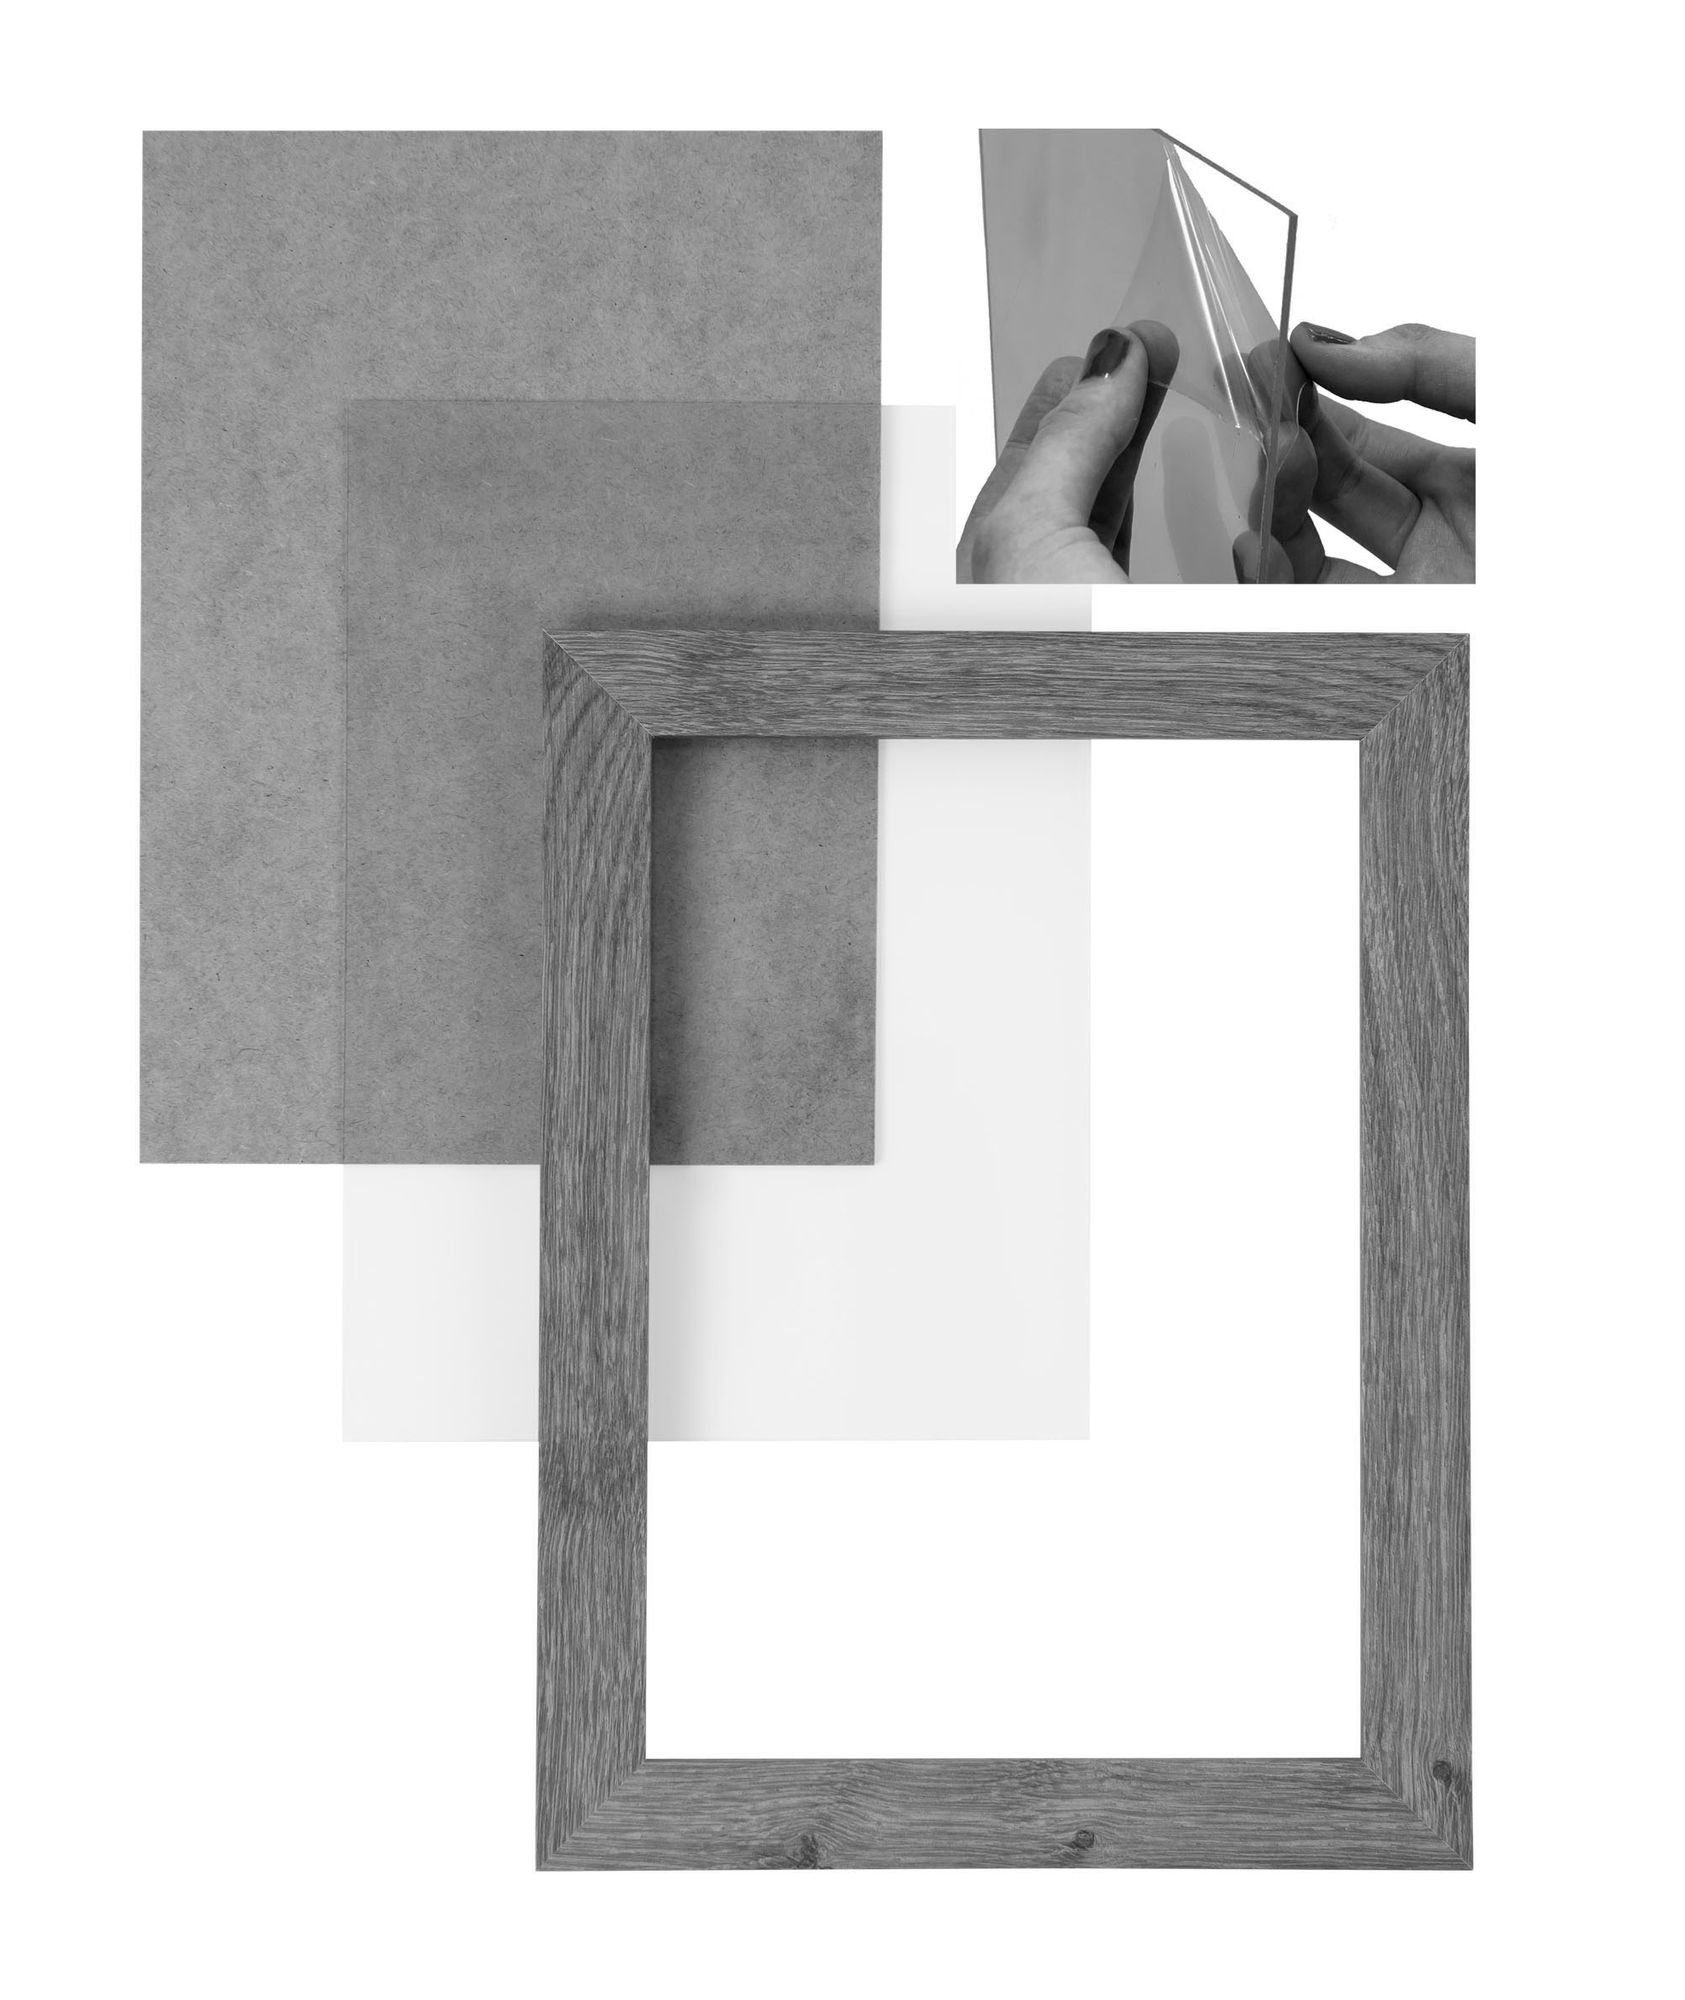 nach Maß eckiger Acrylglas, Moderner inkl. Rückwand 52x76 FSC® Holz Bilderrahmen 'Collage' Aufhänger in Clamaro Bilderrahmen und stahlgrau CLAMARO Rahmen handgefertigt MDF